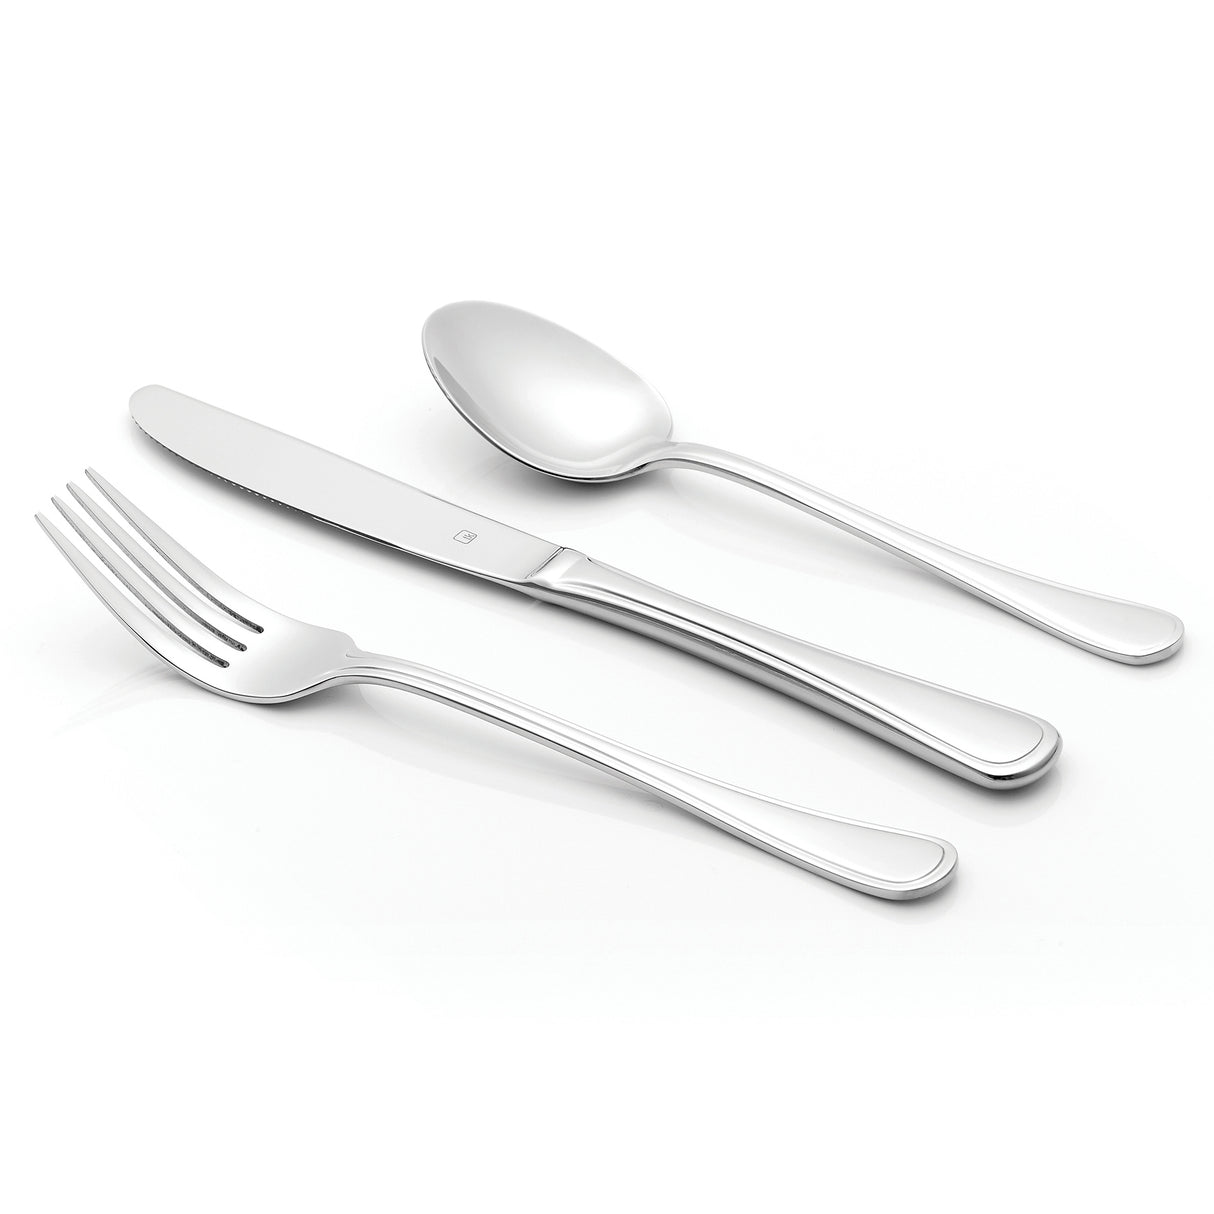 Table Fork - Mirabelle: Pack of 12